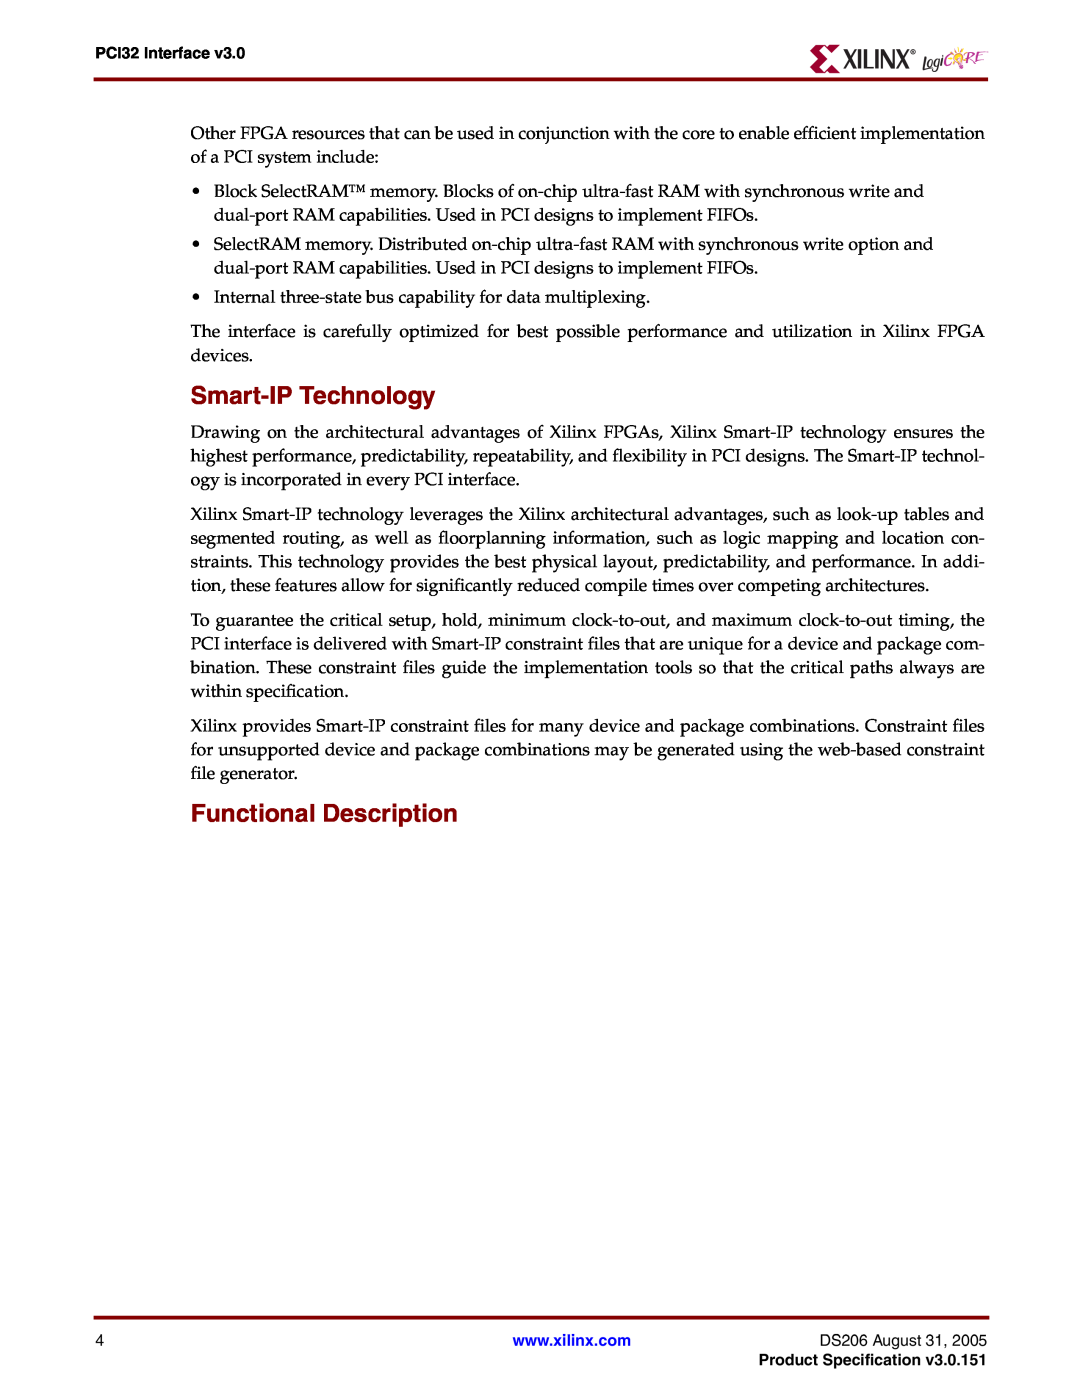 Xilinx PCI32 warranty Smart-IP Technology, Functional Description 